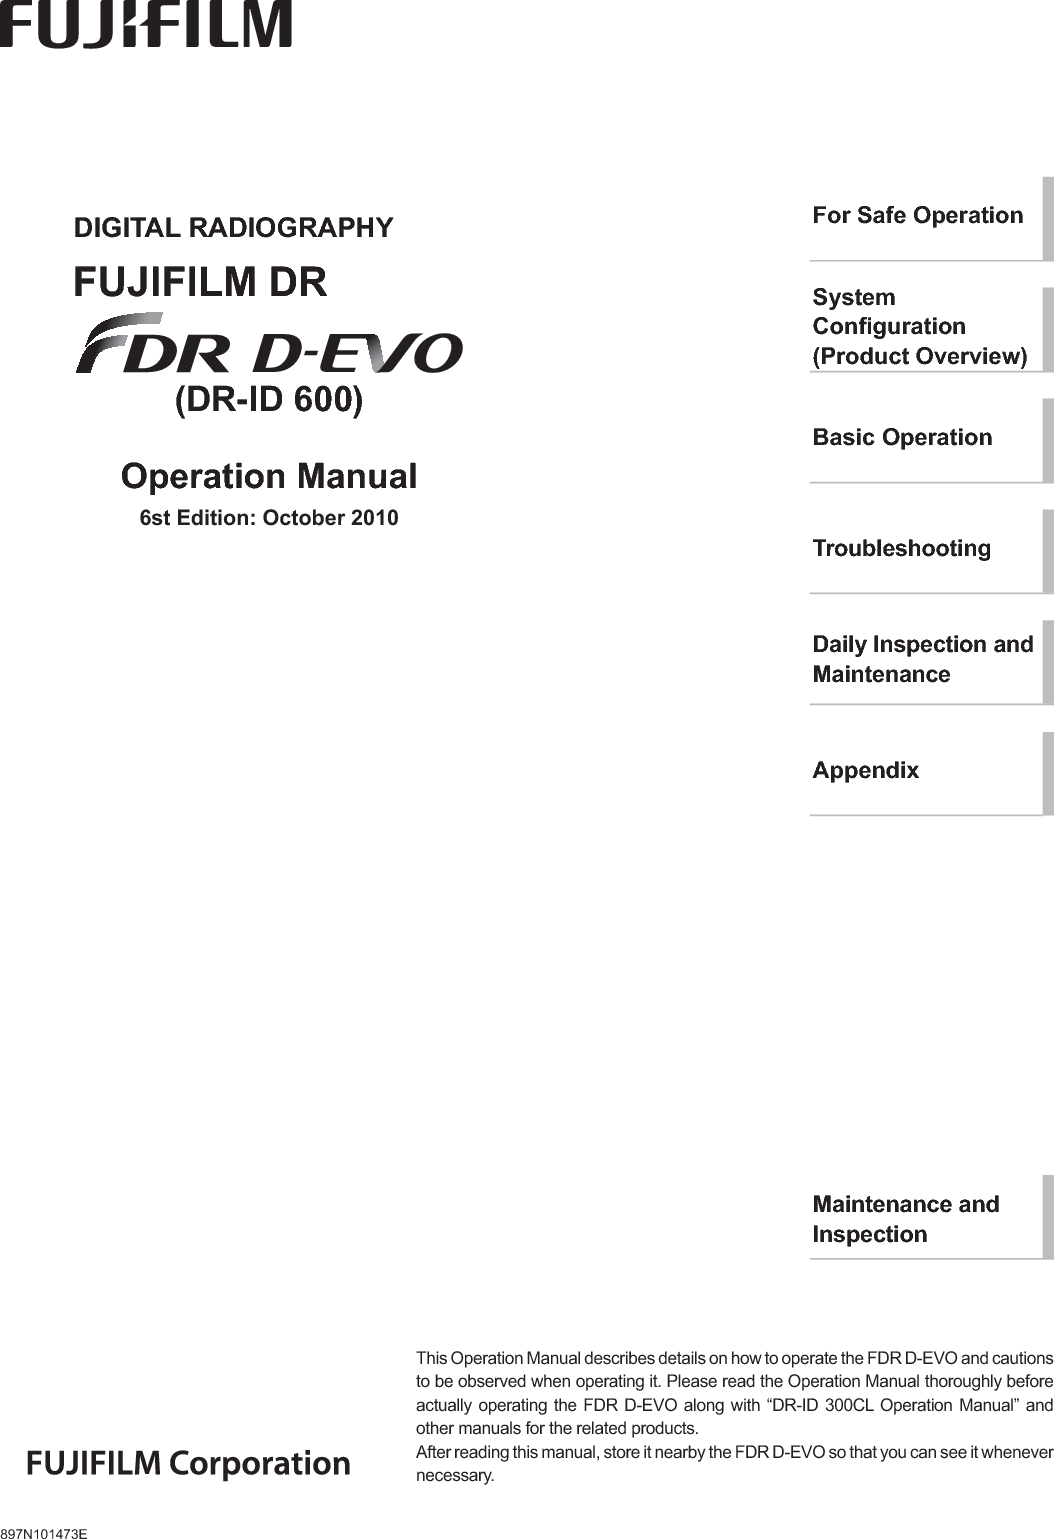 ii FDR D-EVO Operation Manual    897N101473E